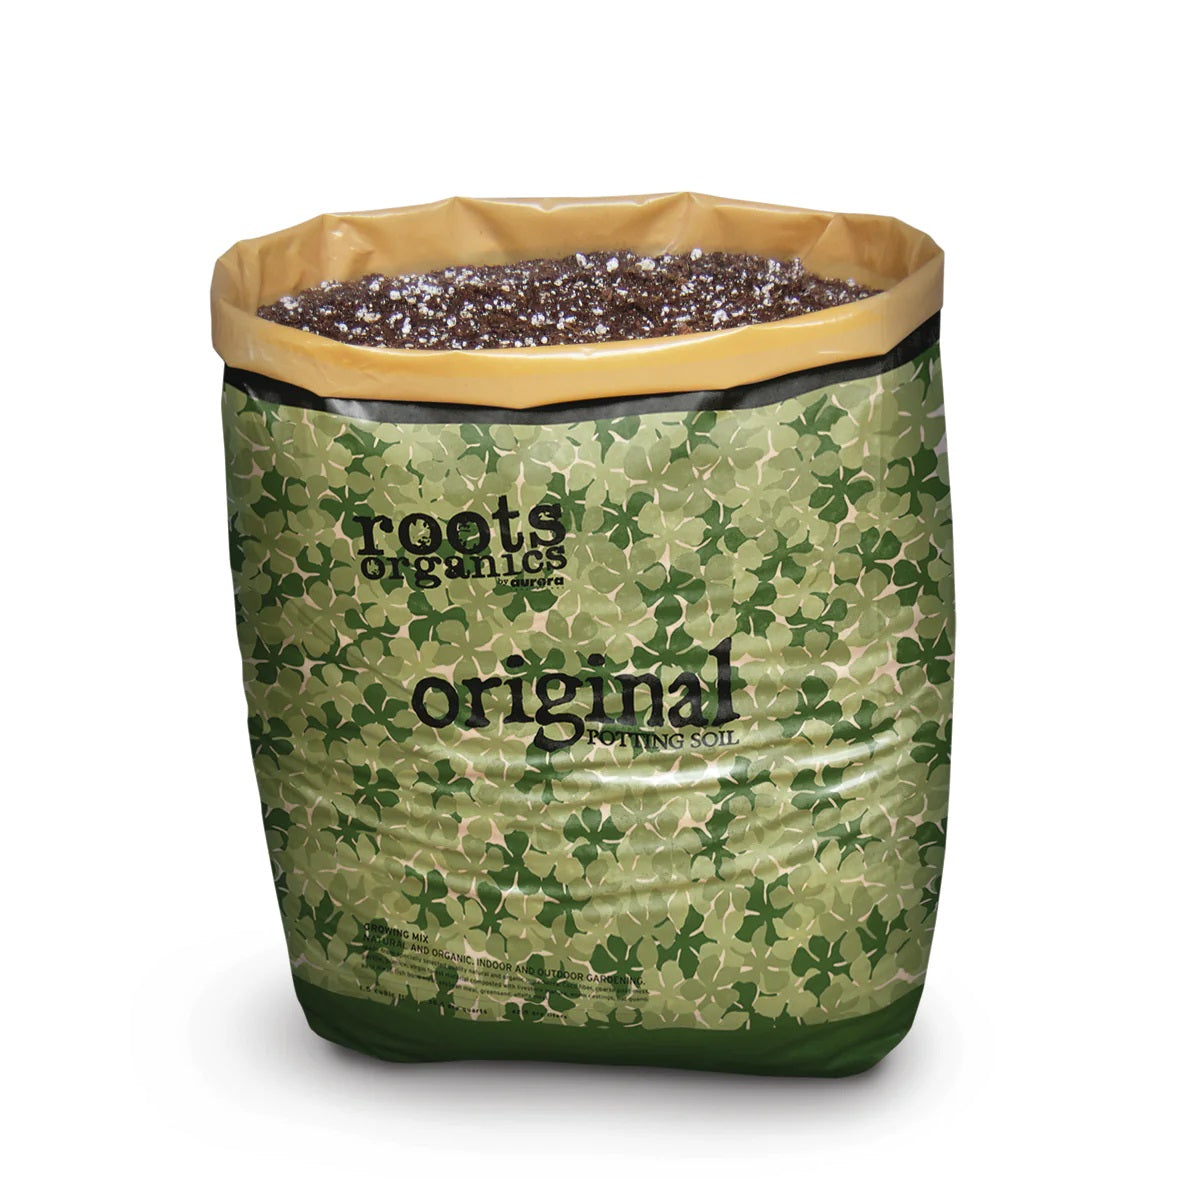 Roots Organics Original Potting Soil, 1.5 Cubic Feet - Pallet of 70 Bags